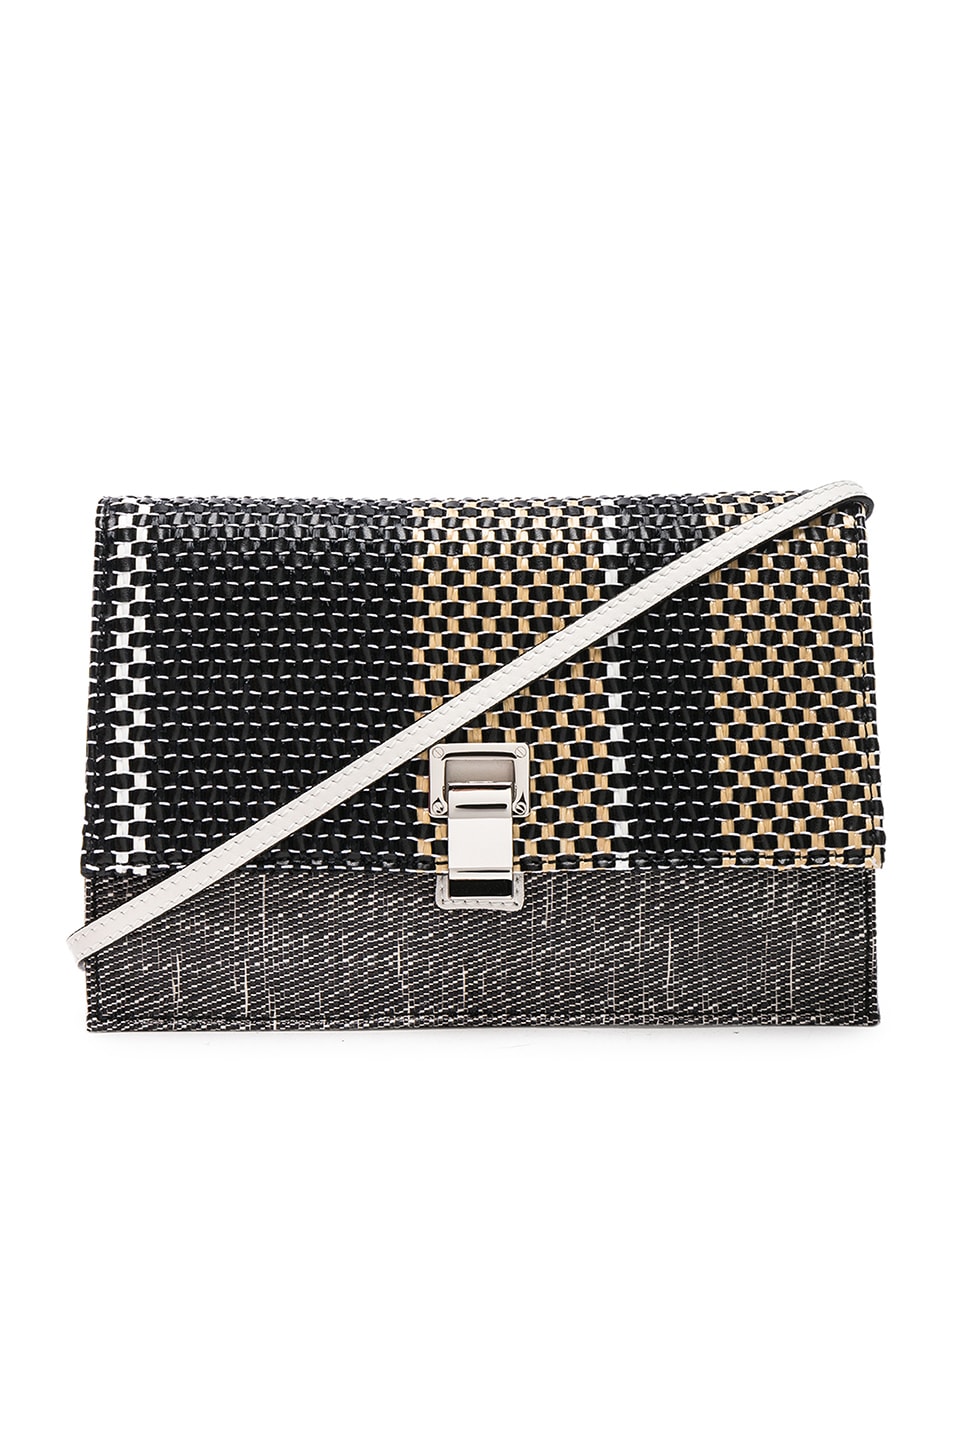 Image 1 of Proenza Schouler Small Knit Stripe Lunch Bag in Black, White & Ecru